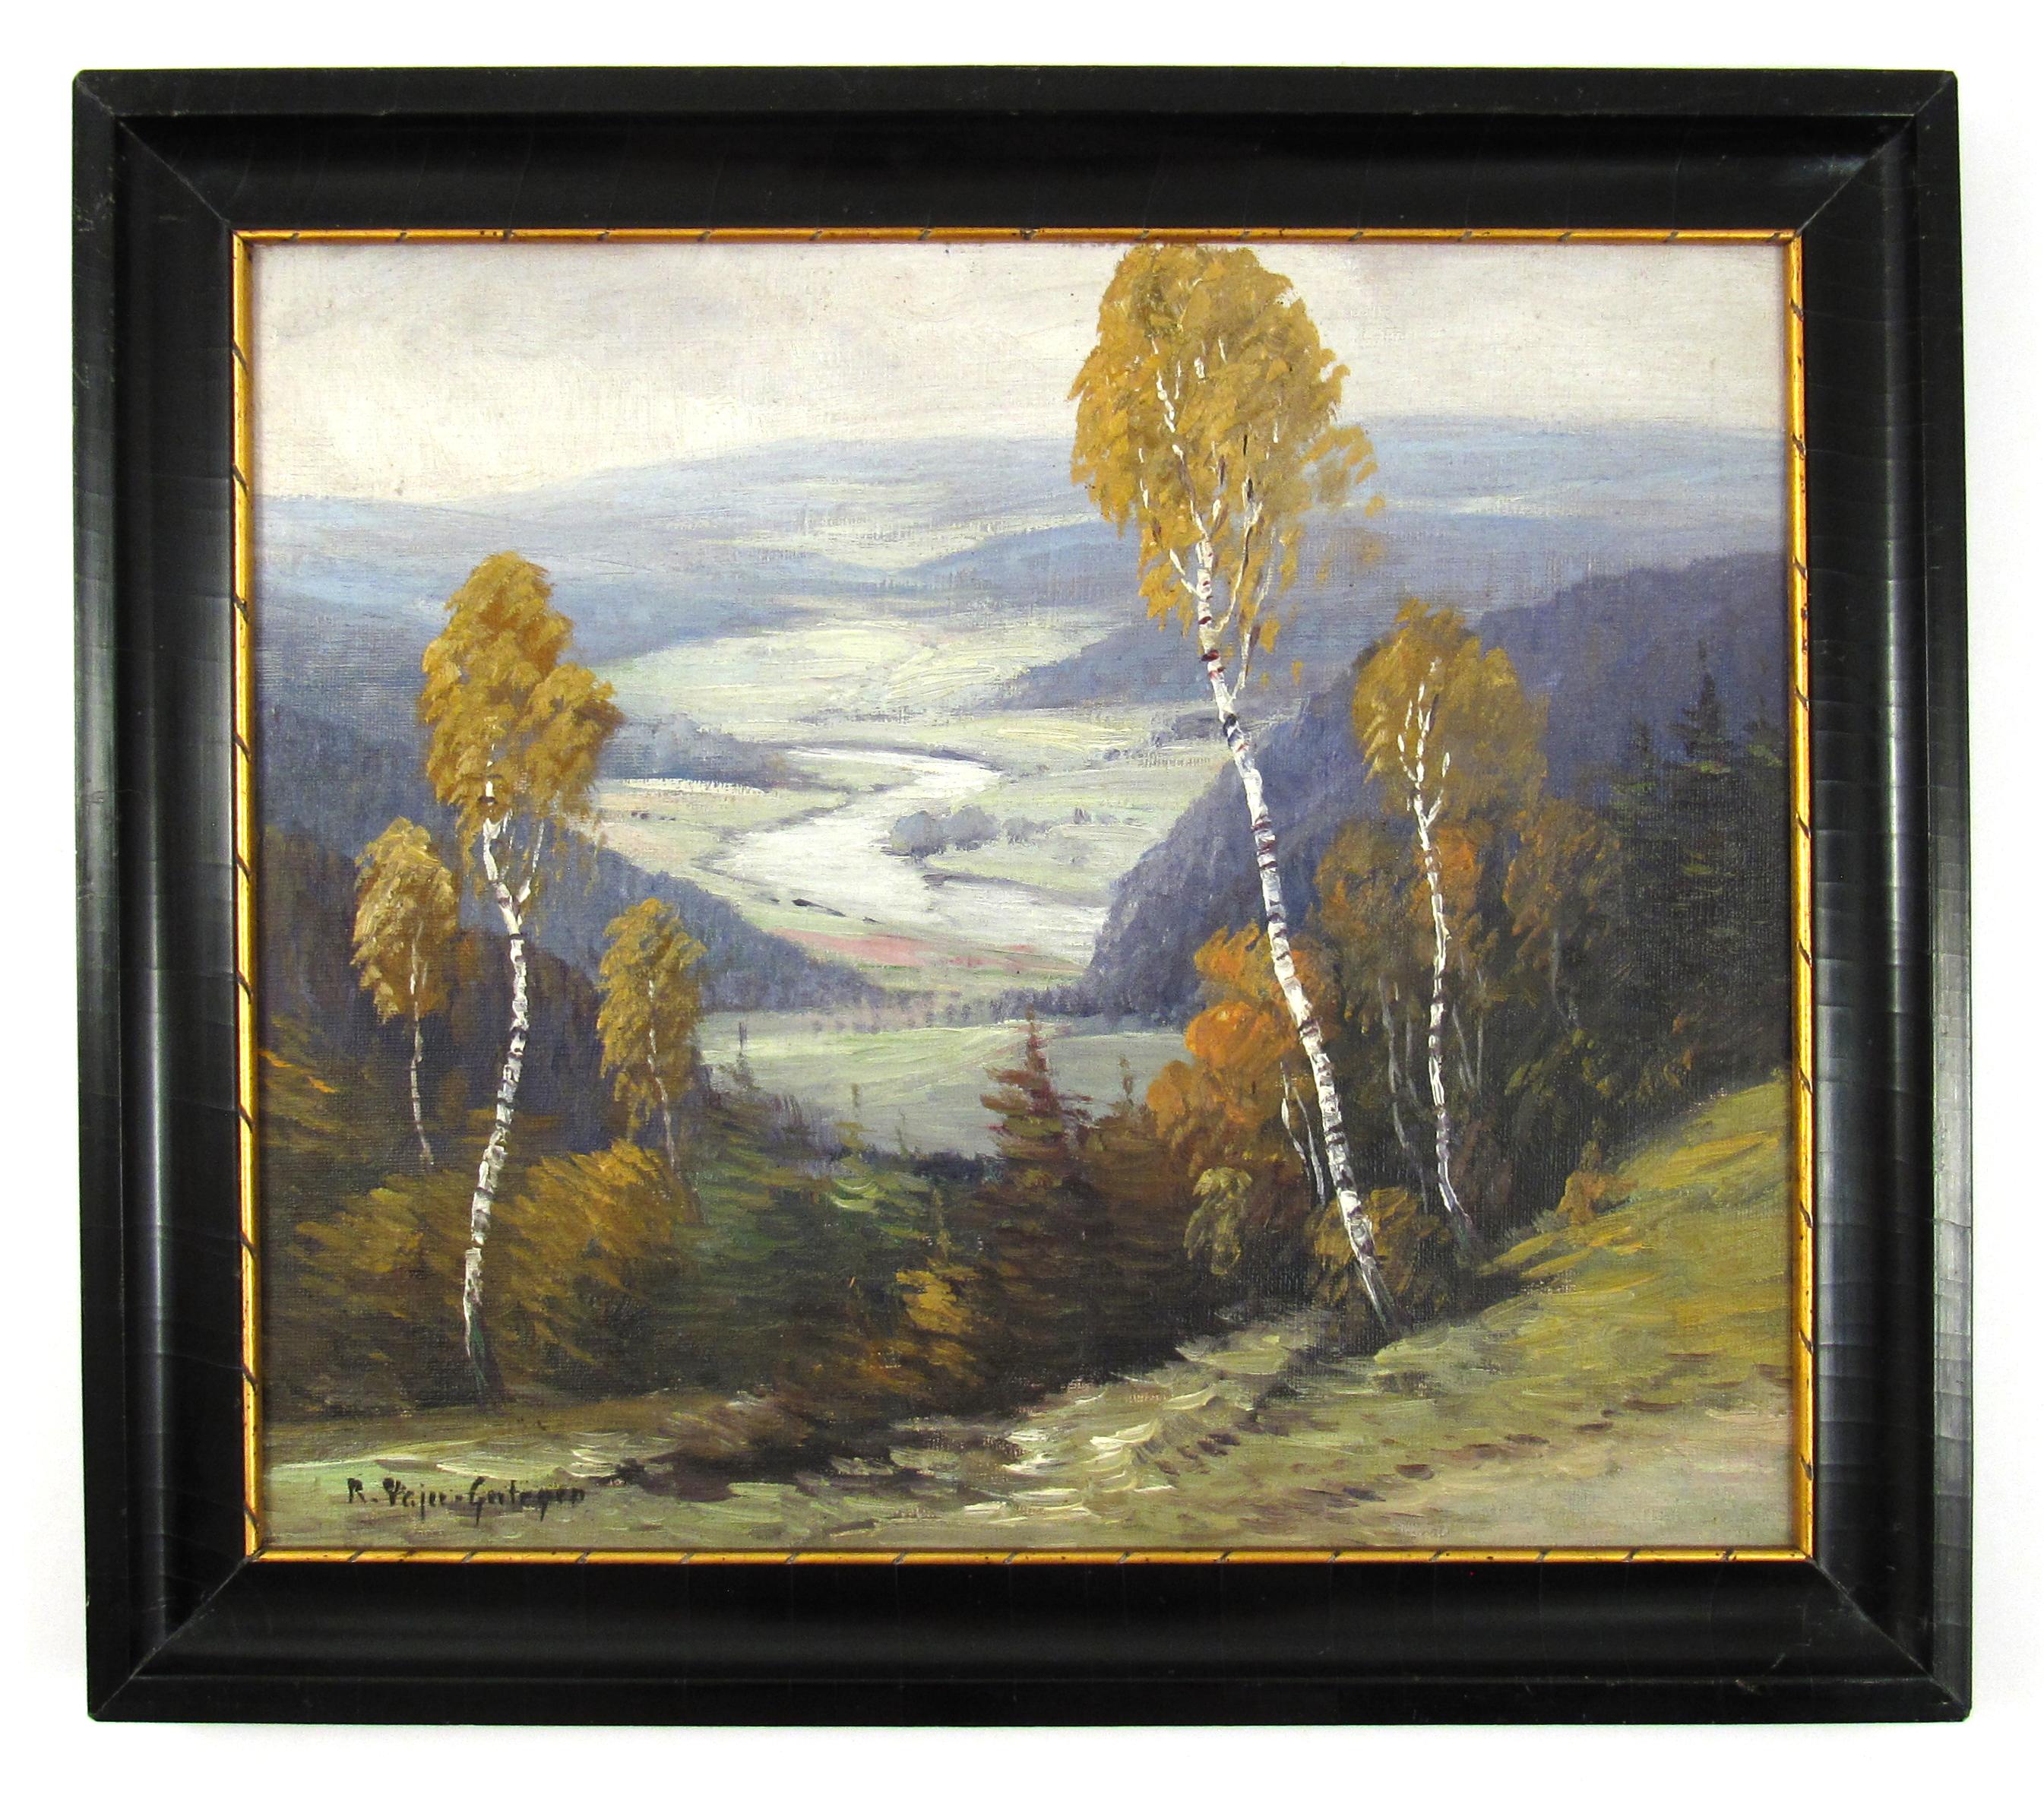 Robert Pajer - Gartegen (1886-1944) Donau- Flusslandschaft, Gemälde Österreich 1924 – Painting von Robert PAJER-GARTEGEN